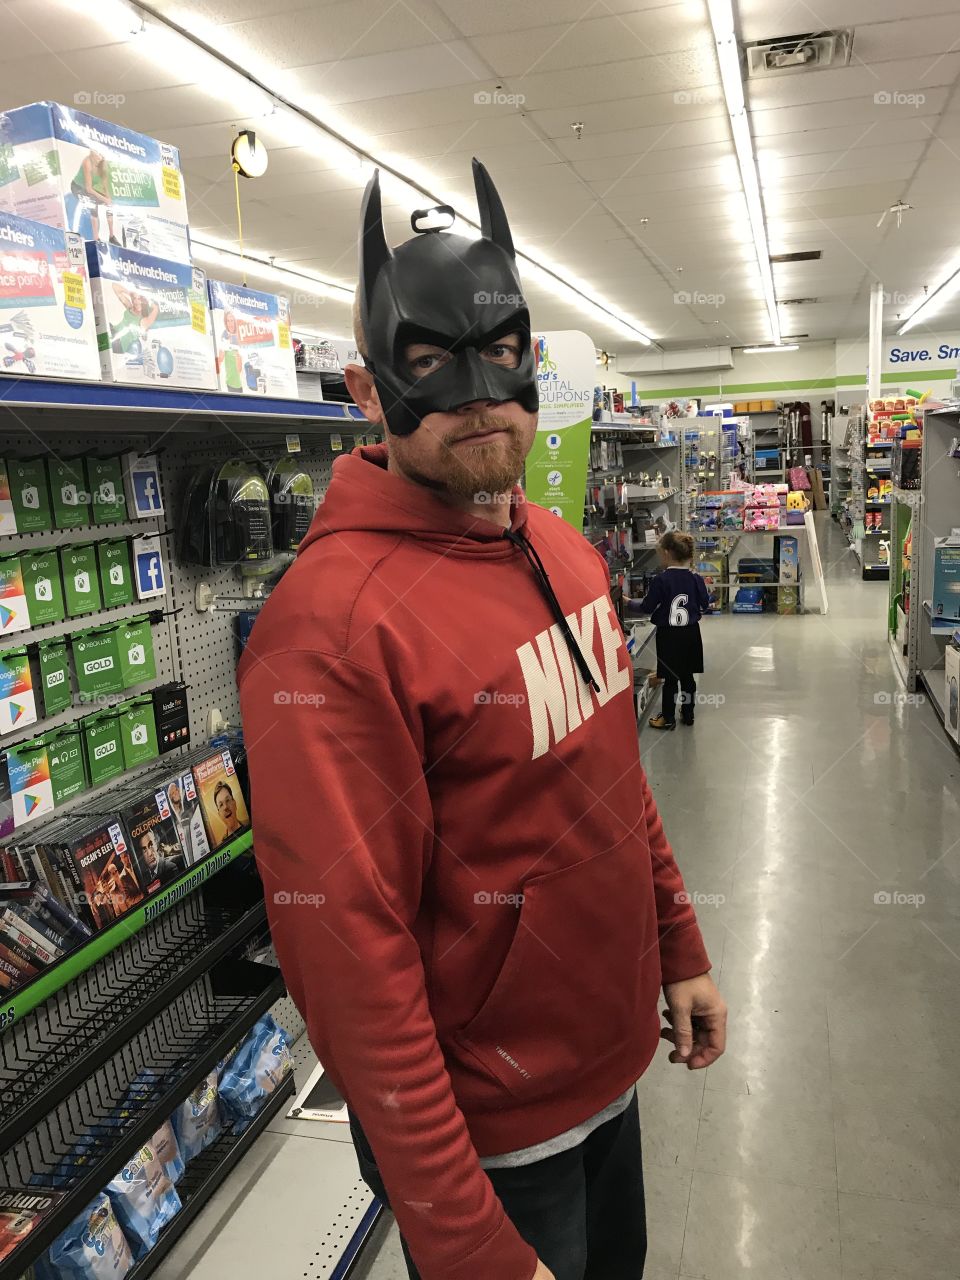 If Batman were to go shopping